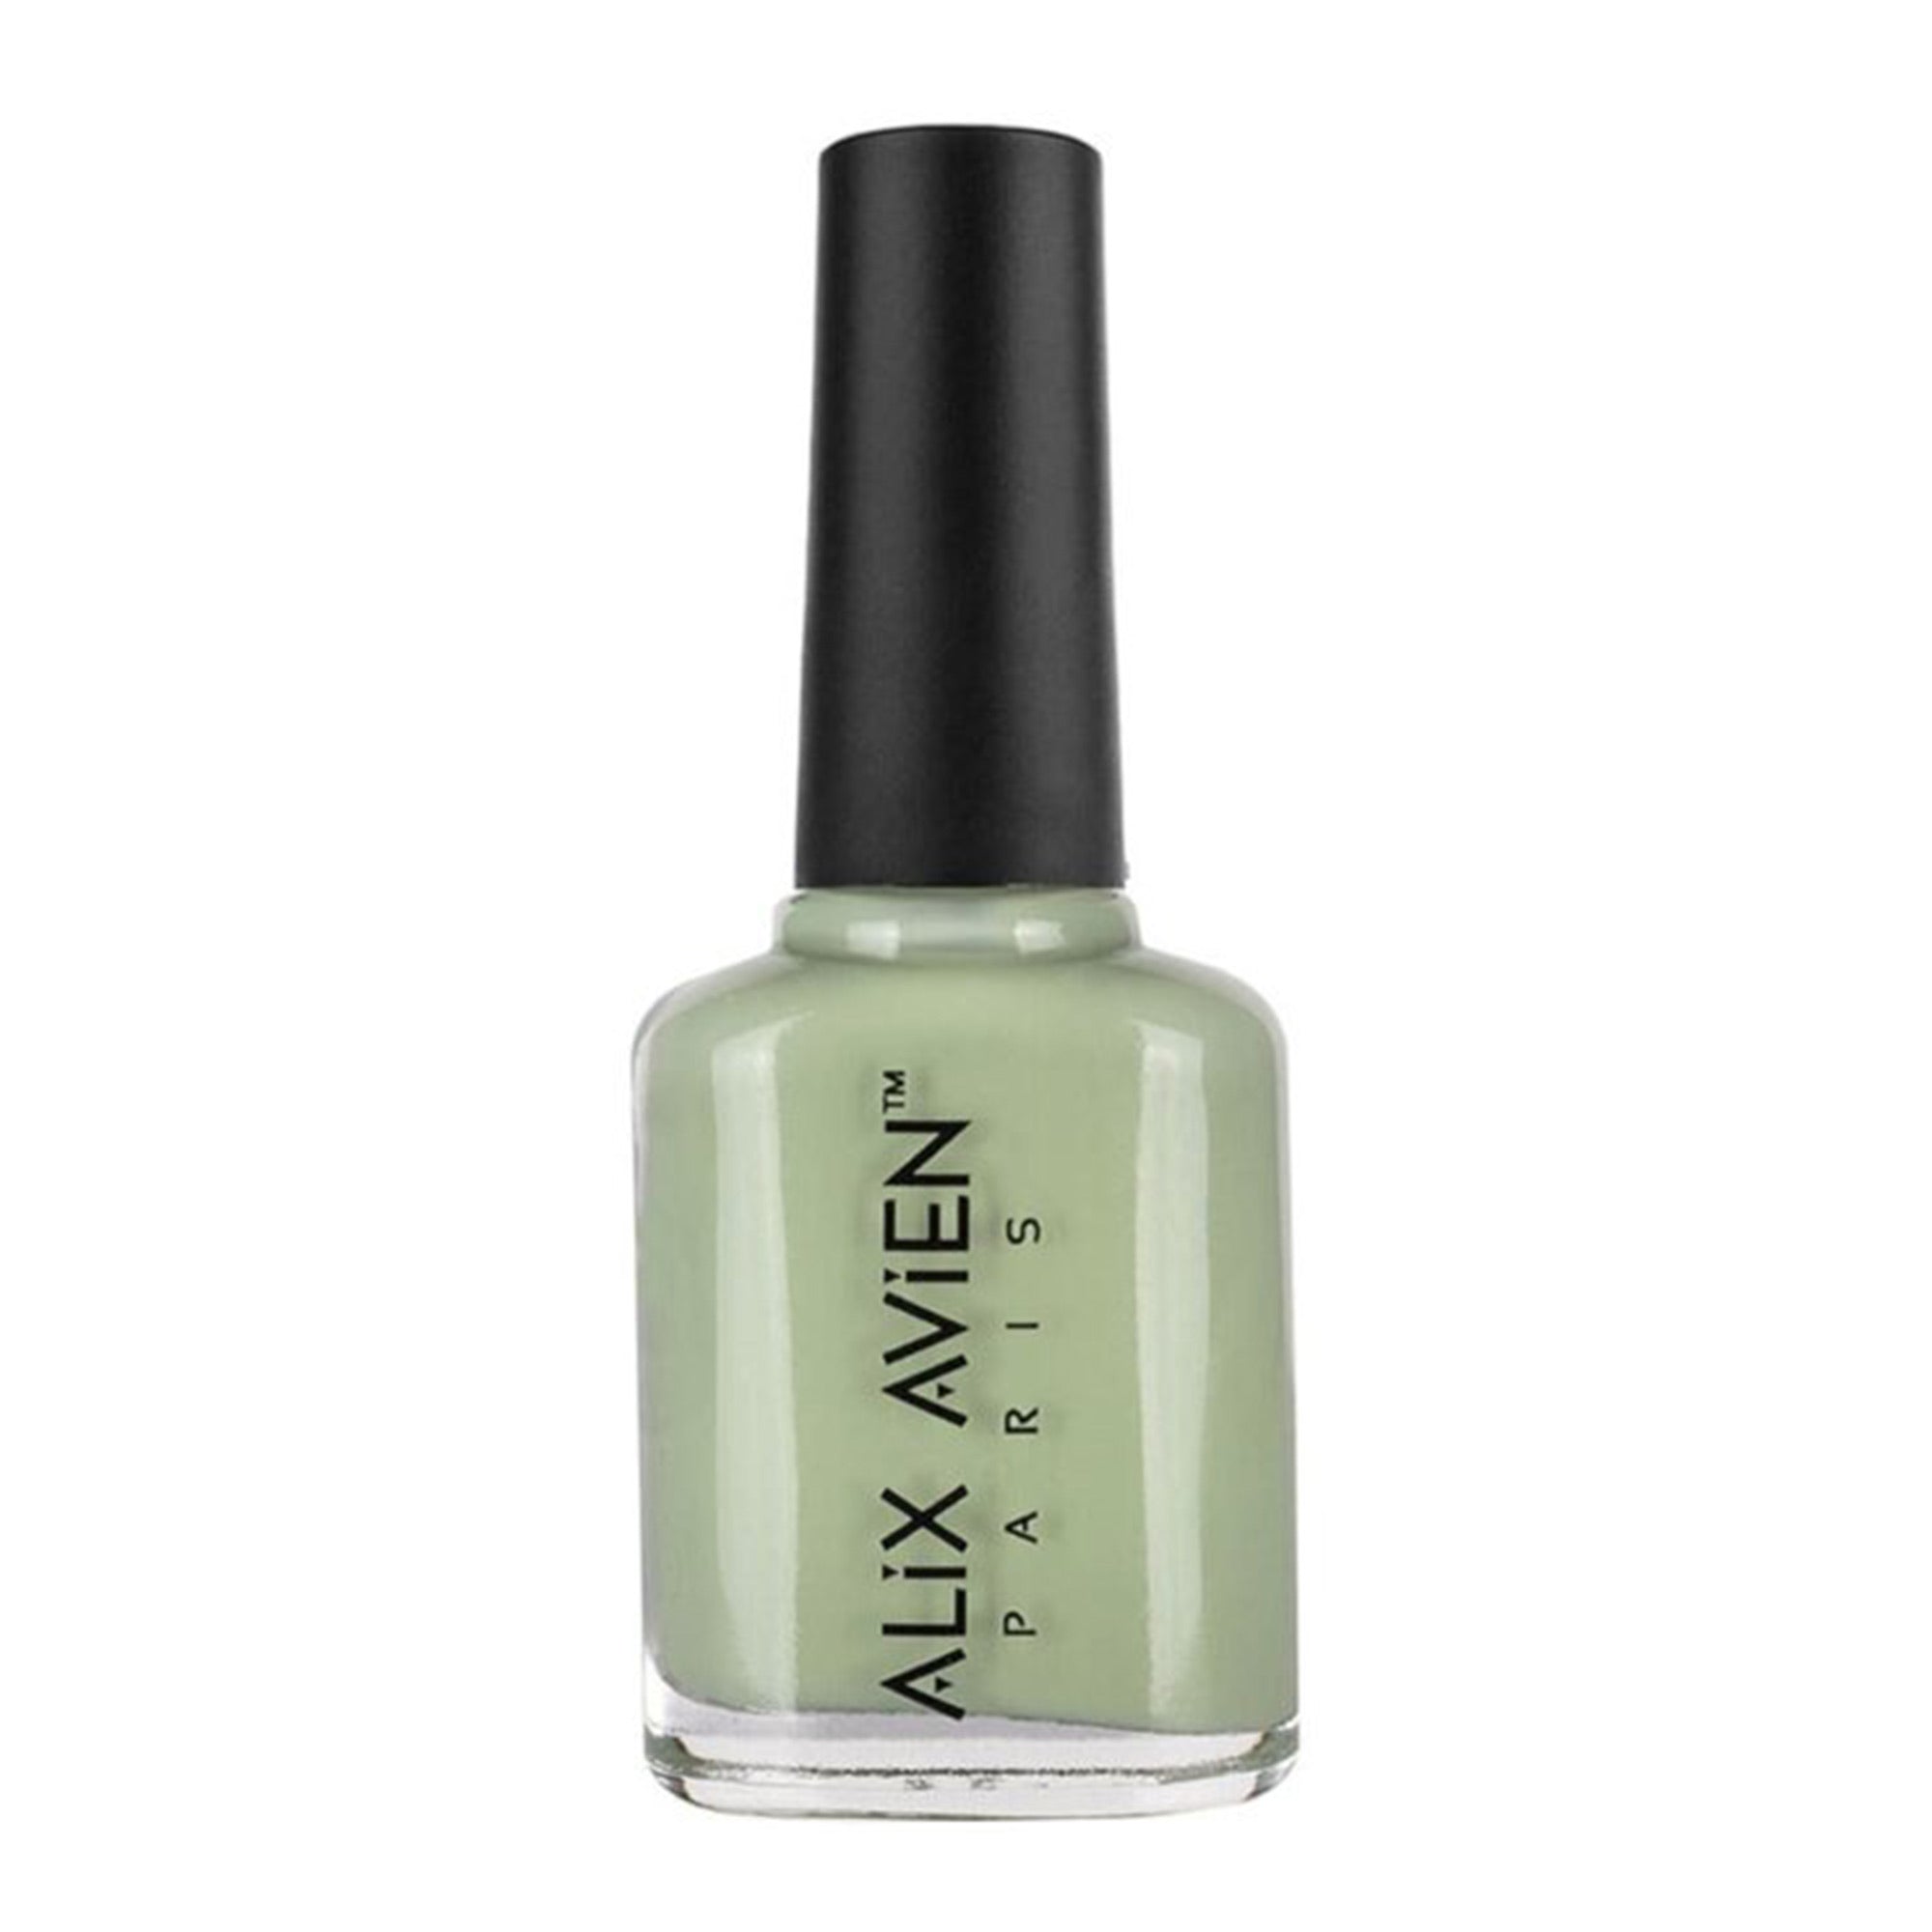 Alix Avien - Nail Polish No.67 (Mint Green)